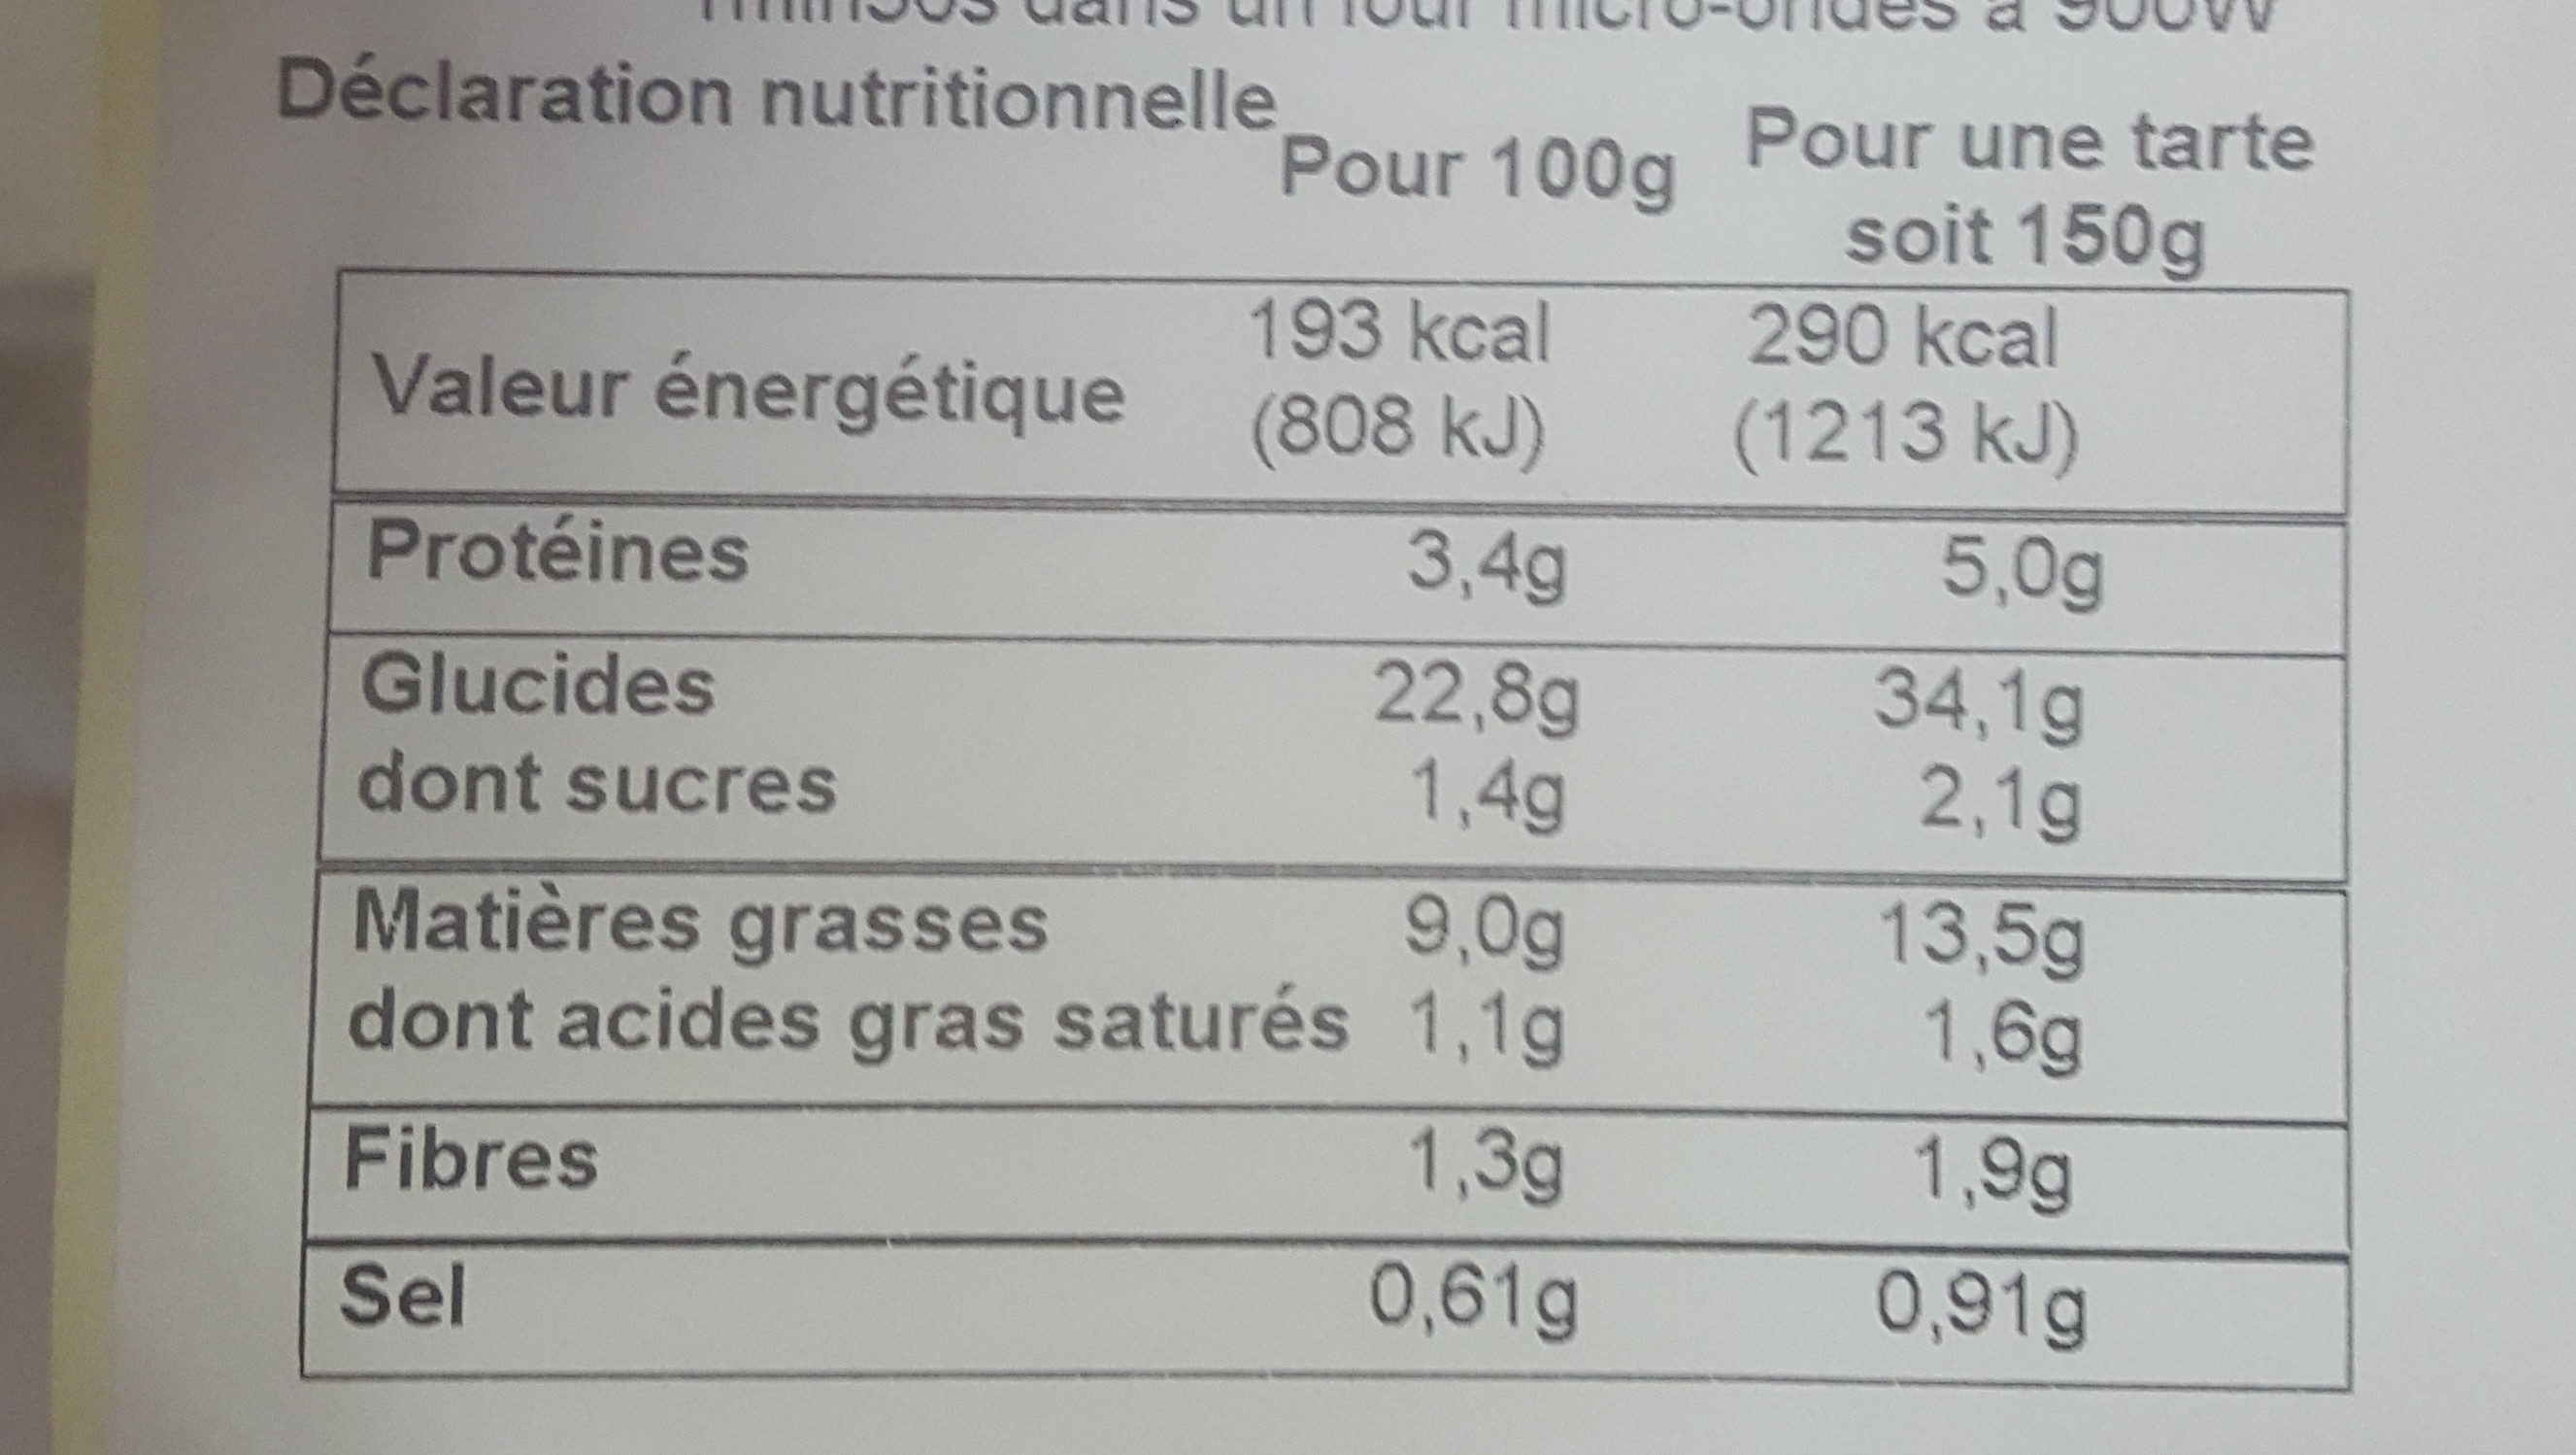 Tarte compotee d'aubergines aux olives - Voedingswaarden - fr